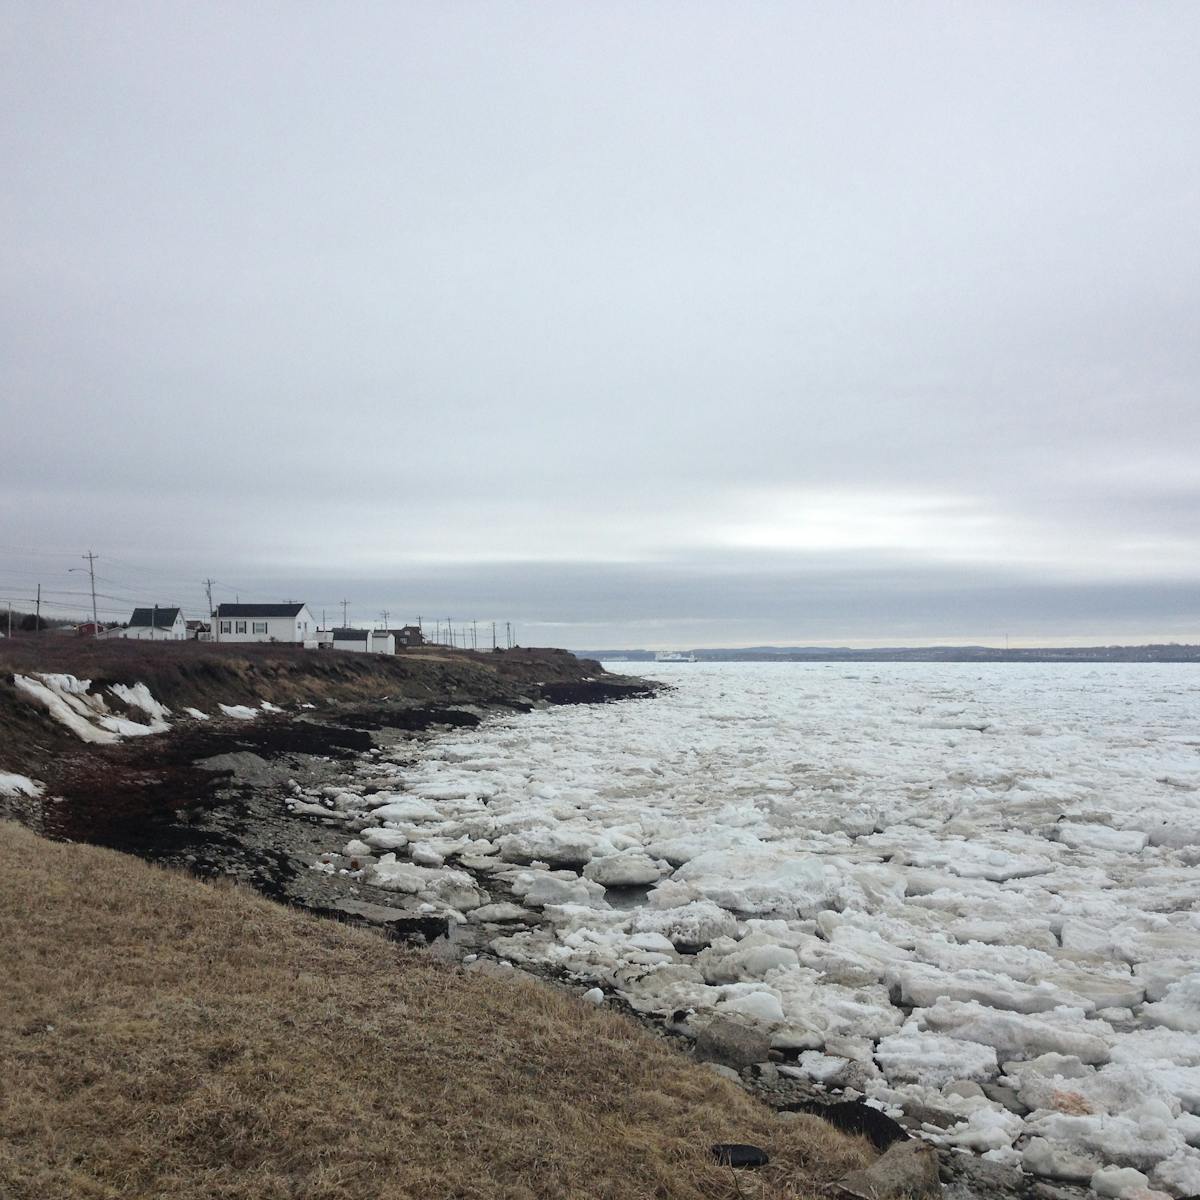 ice chunks lining the coast